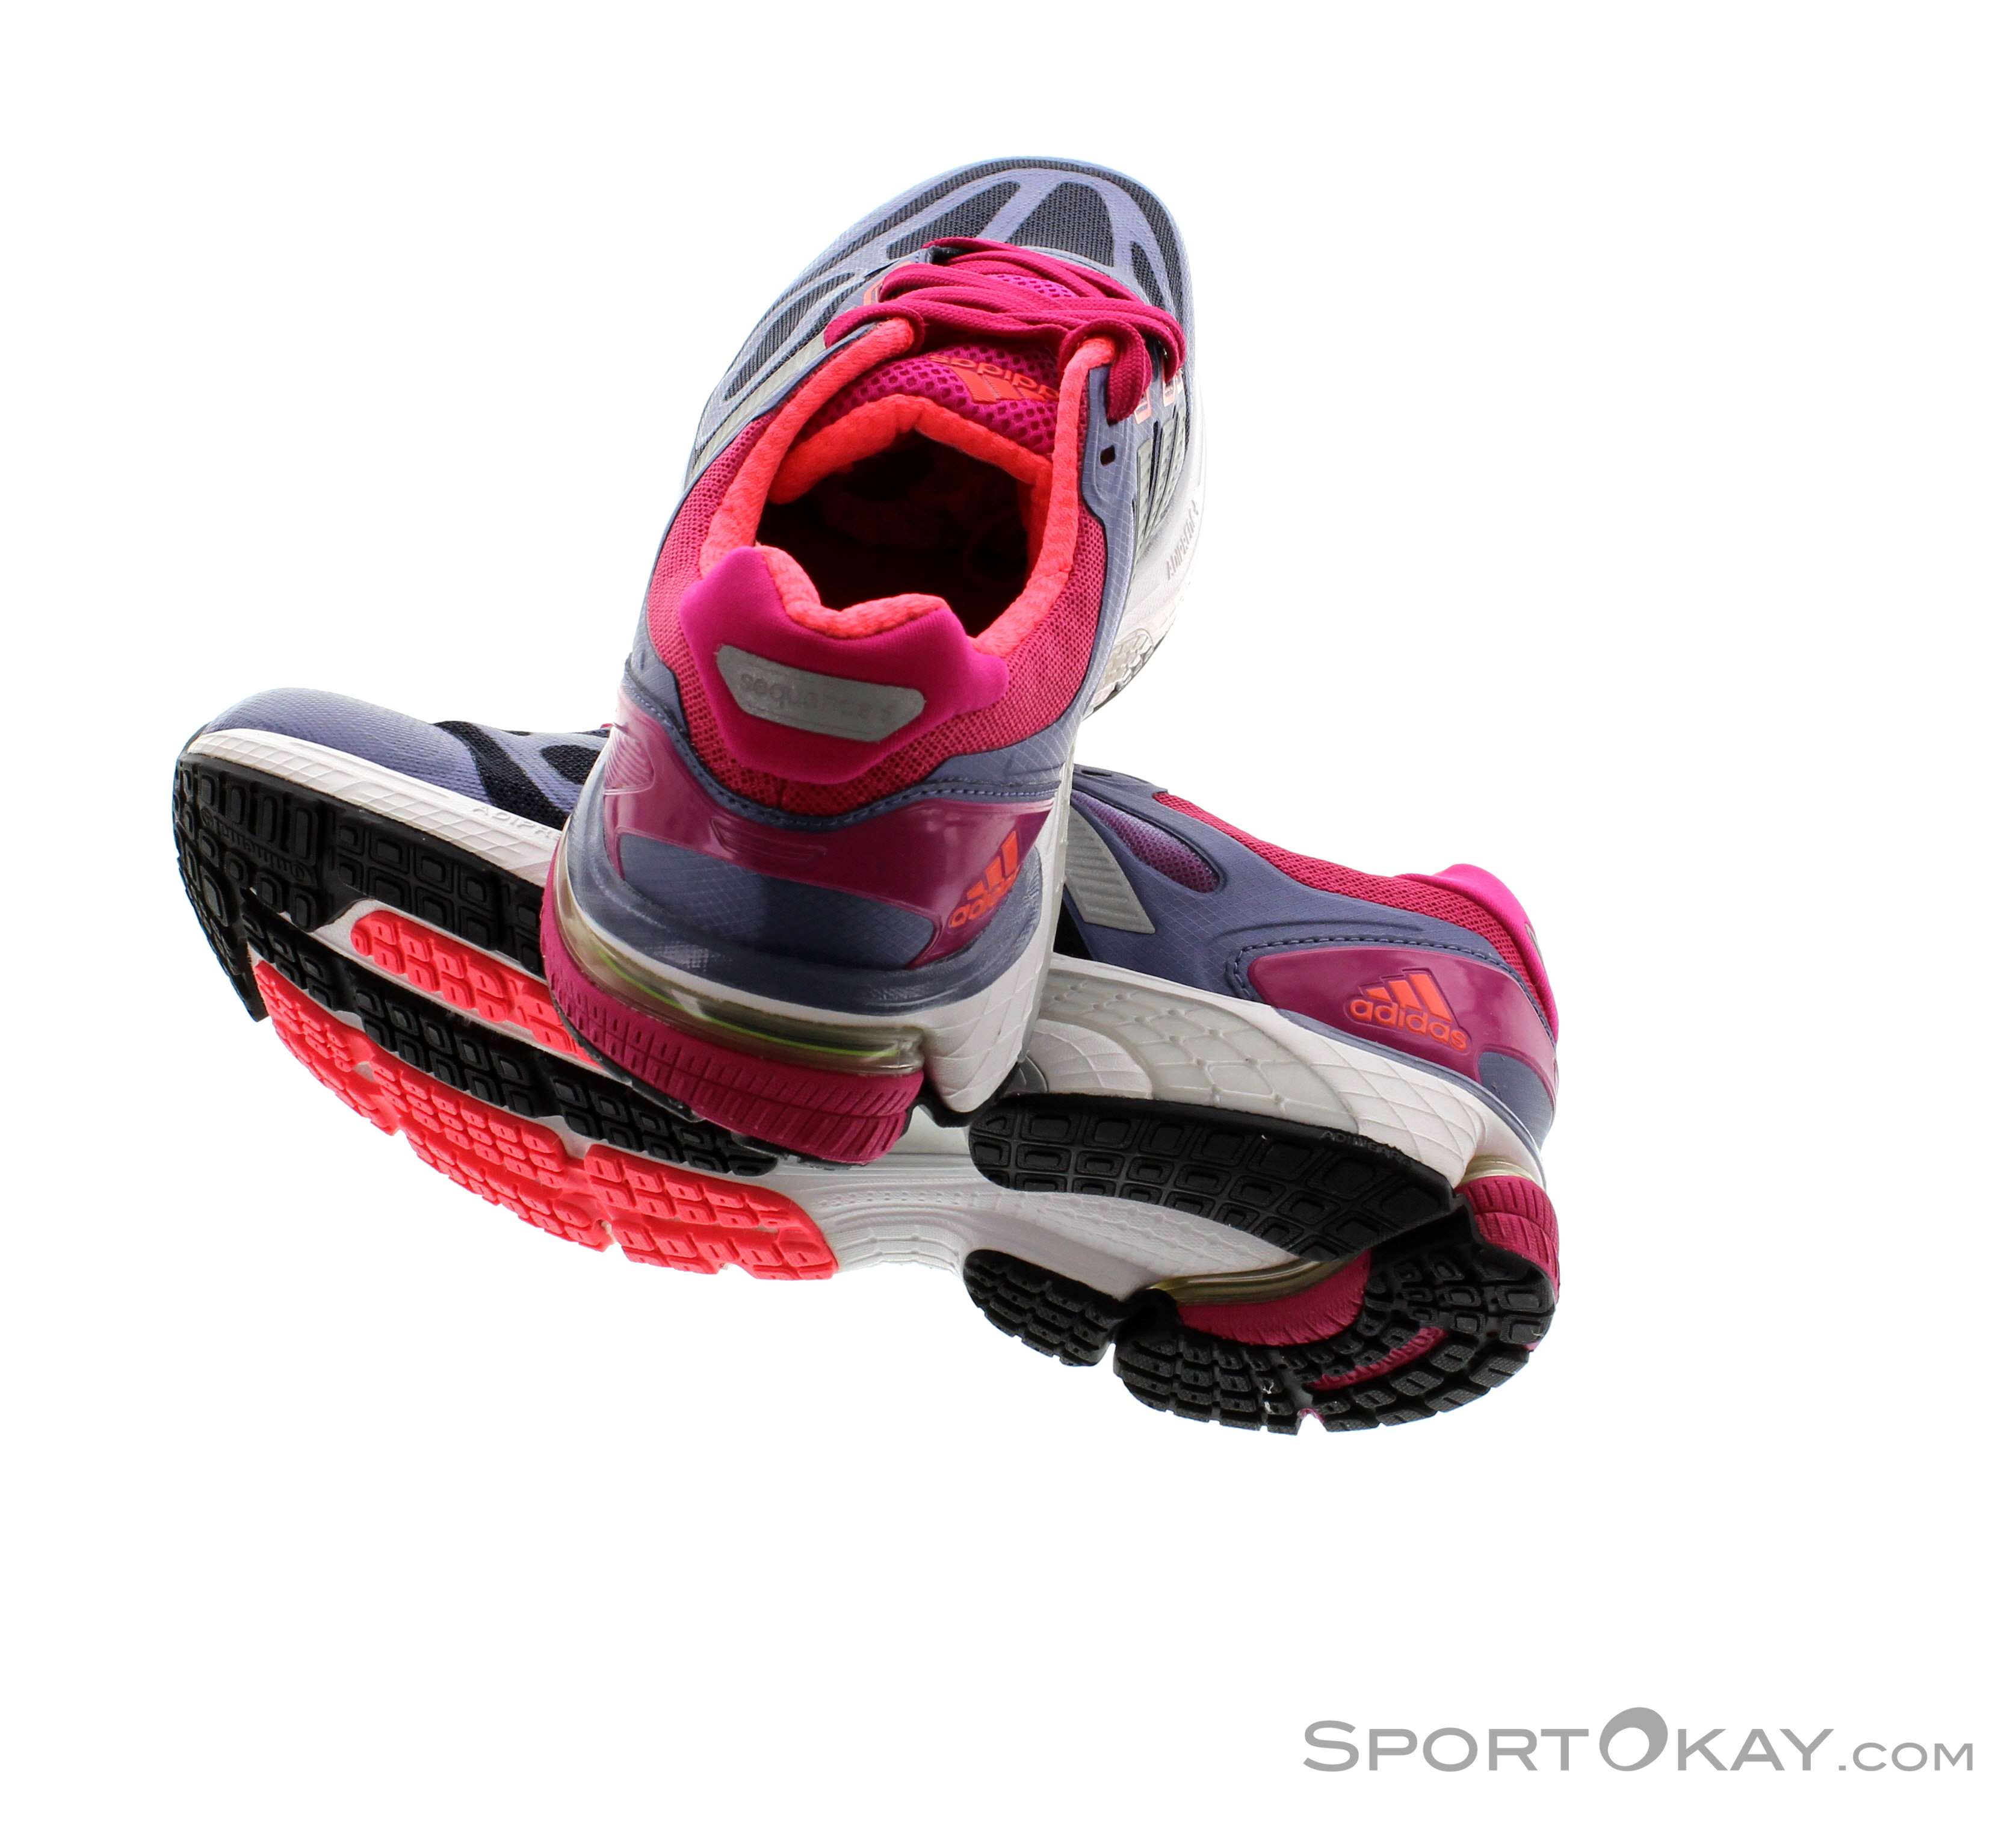 Adidas Supernova Sequence 6 W Damen Laufschuhe - All-Round Shoes - Running Shoes - Running - All